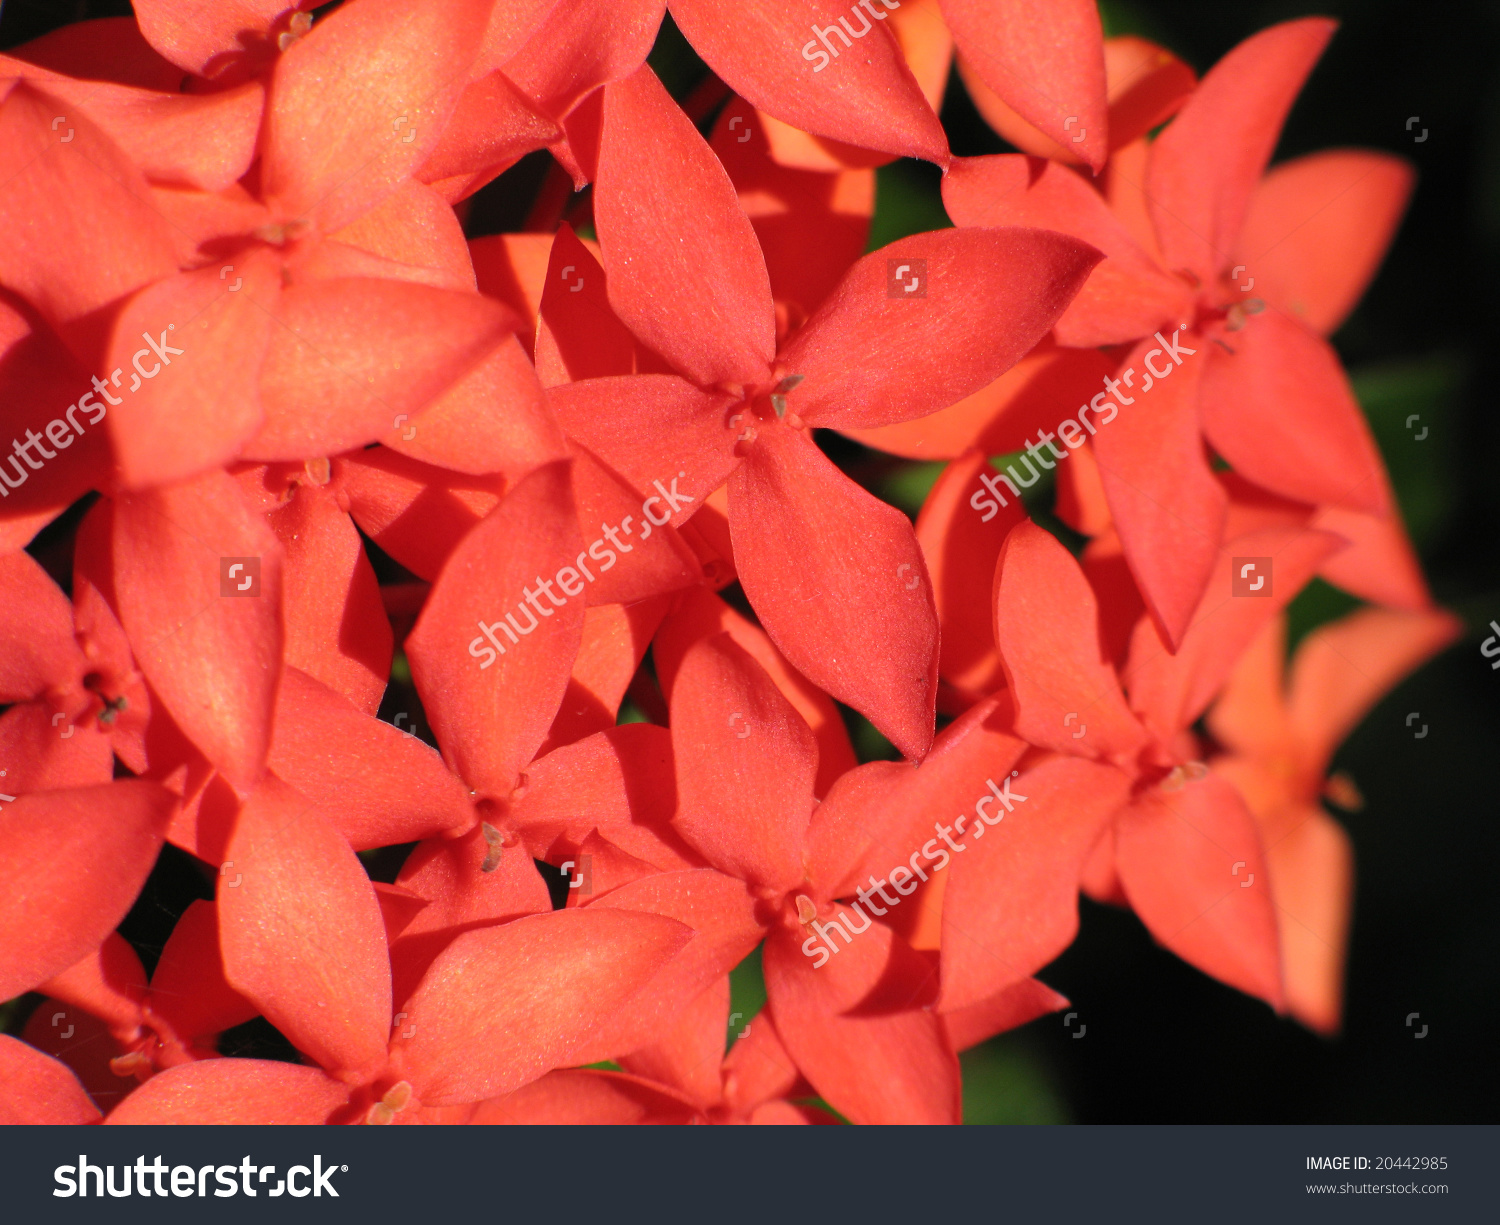 orange flowers close-up #20442985